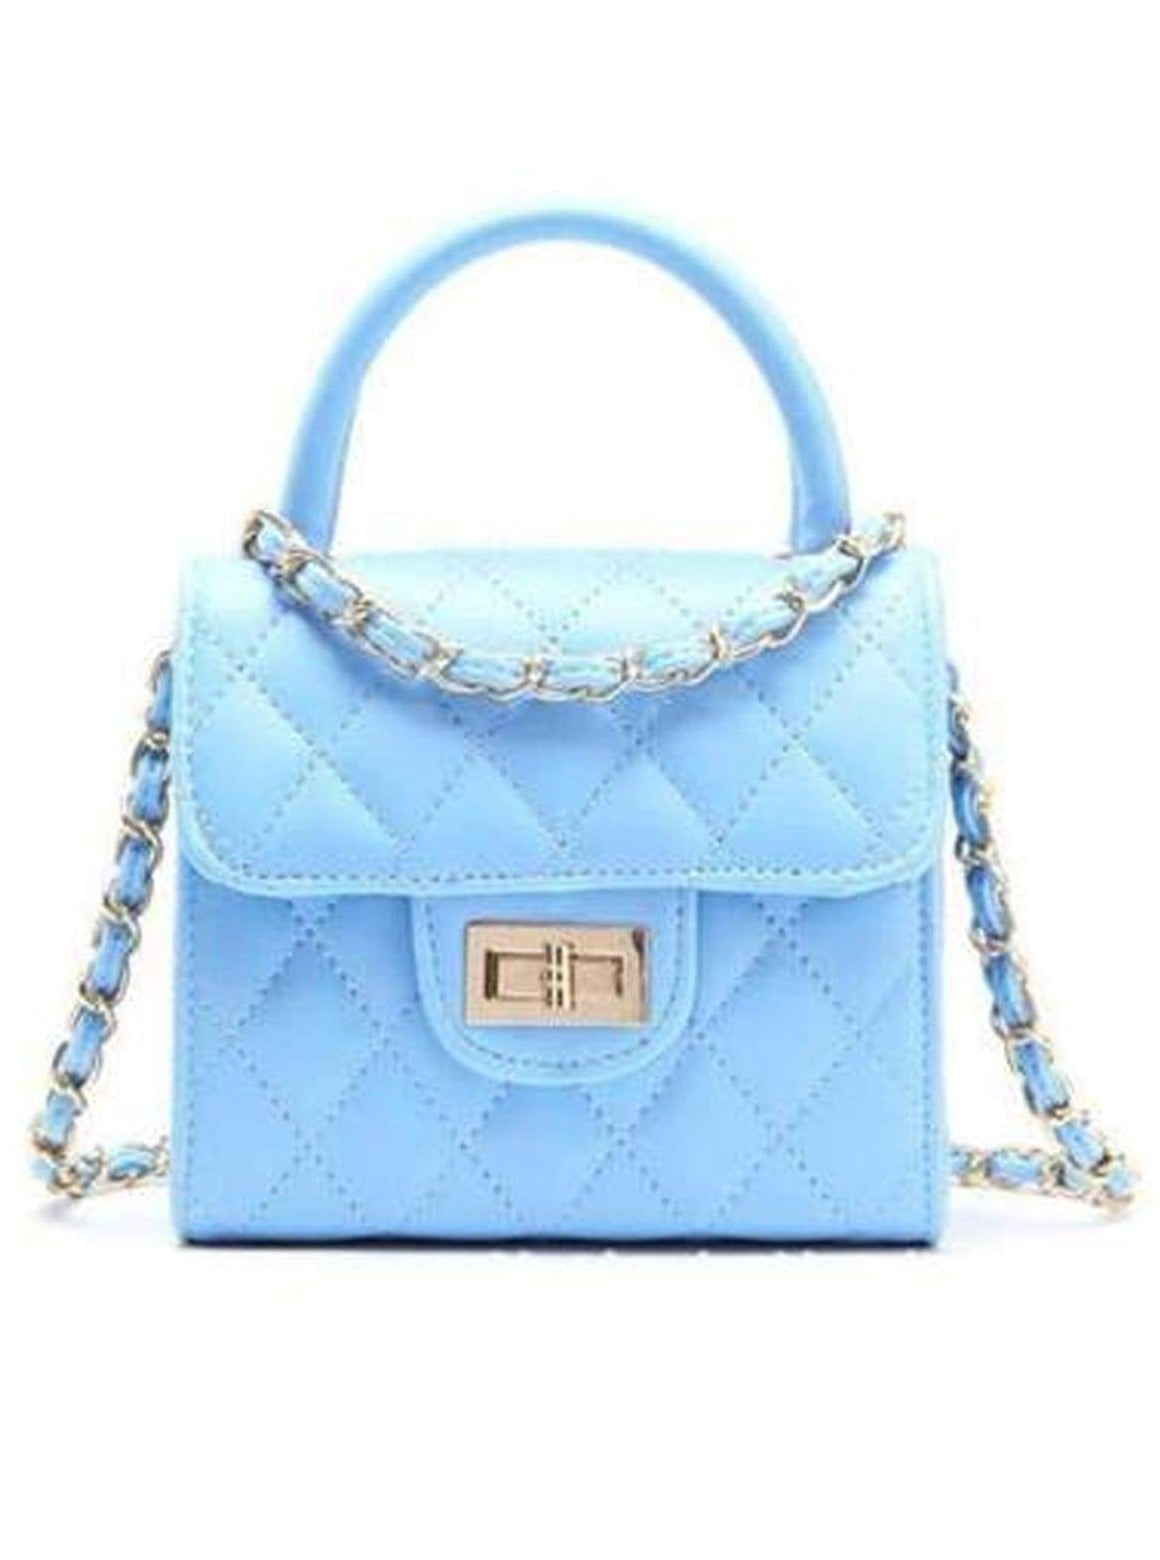 chanel mini blue bag